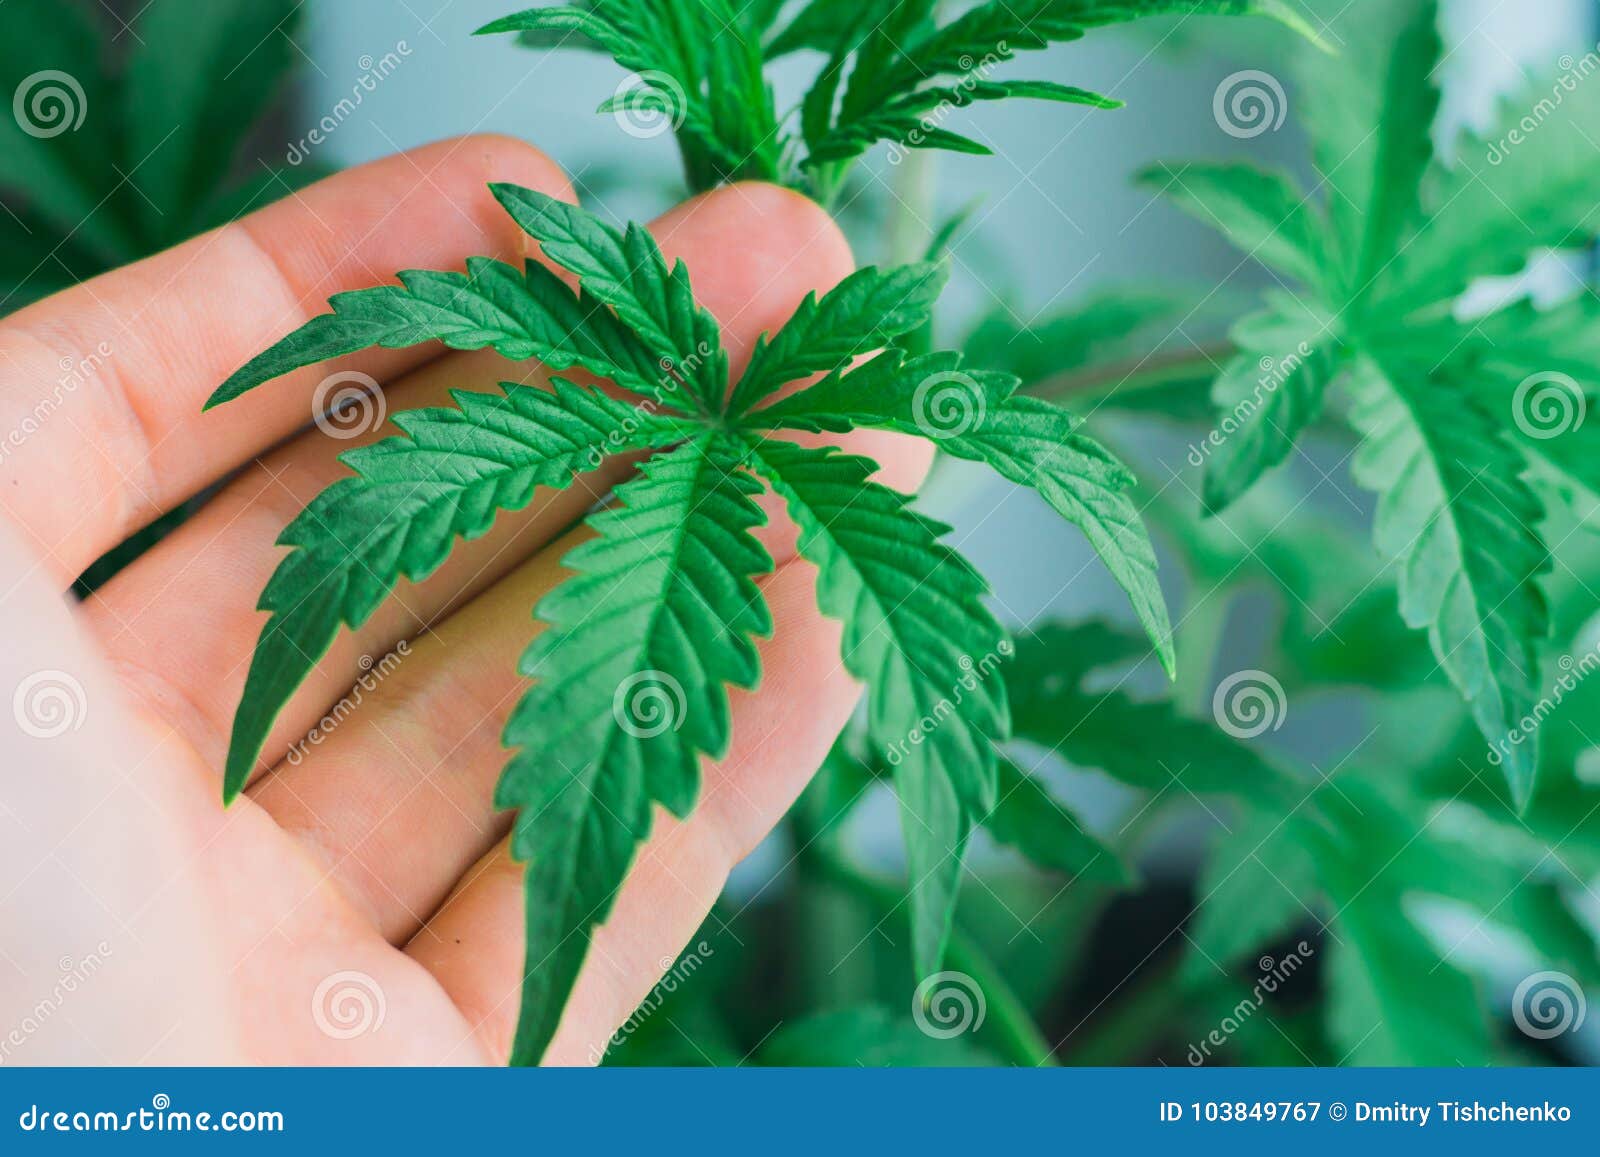 фото конопли марихуаны